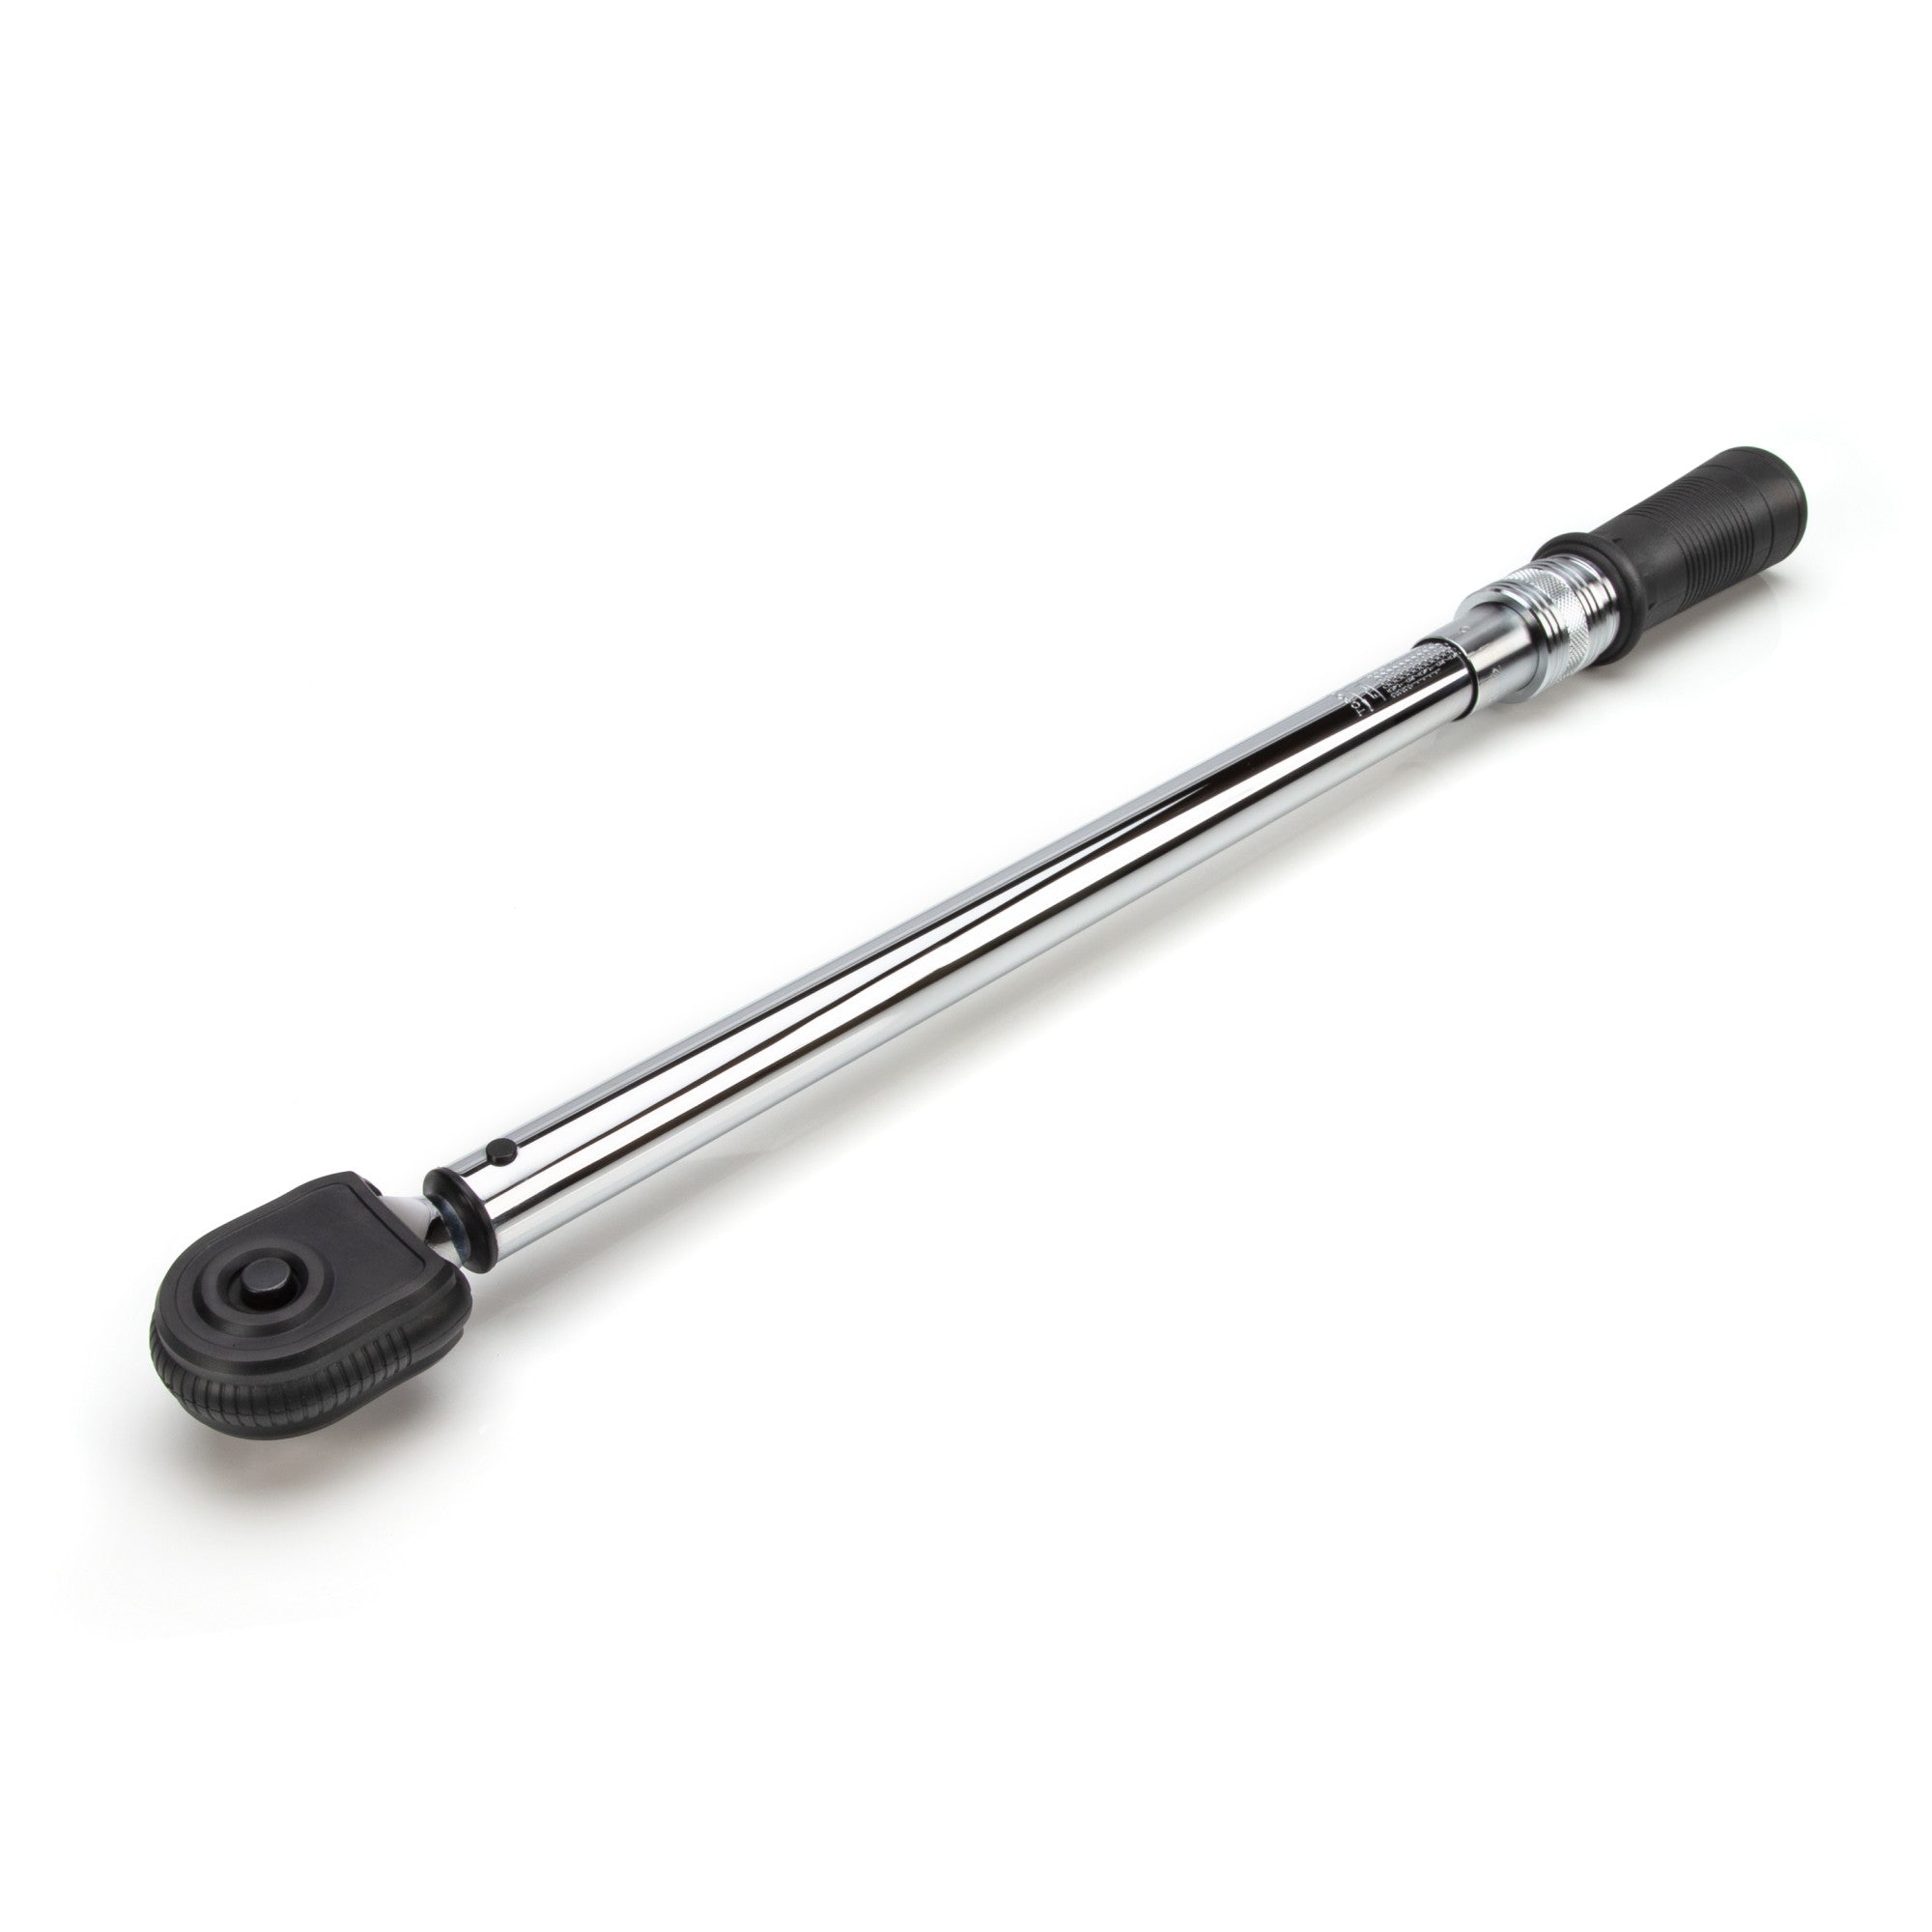 Steelman 3/8-In Drive 30-200 In-Lb Micro-Adjustable Torque Wrench